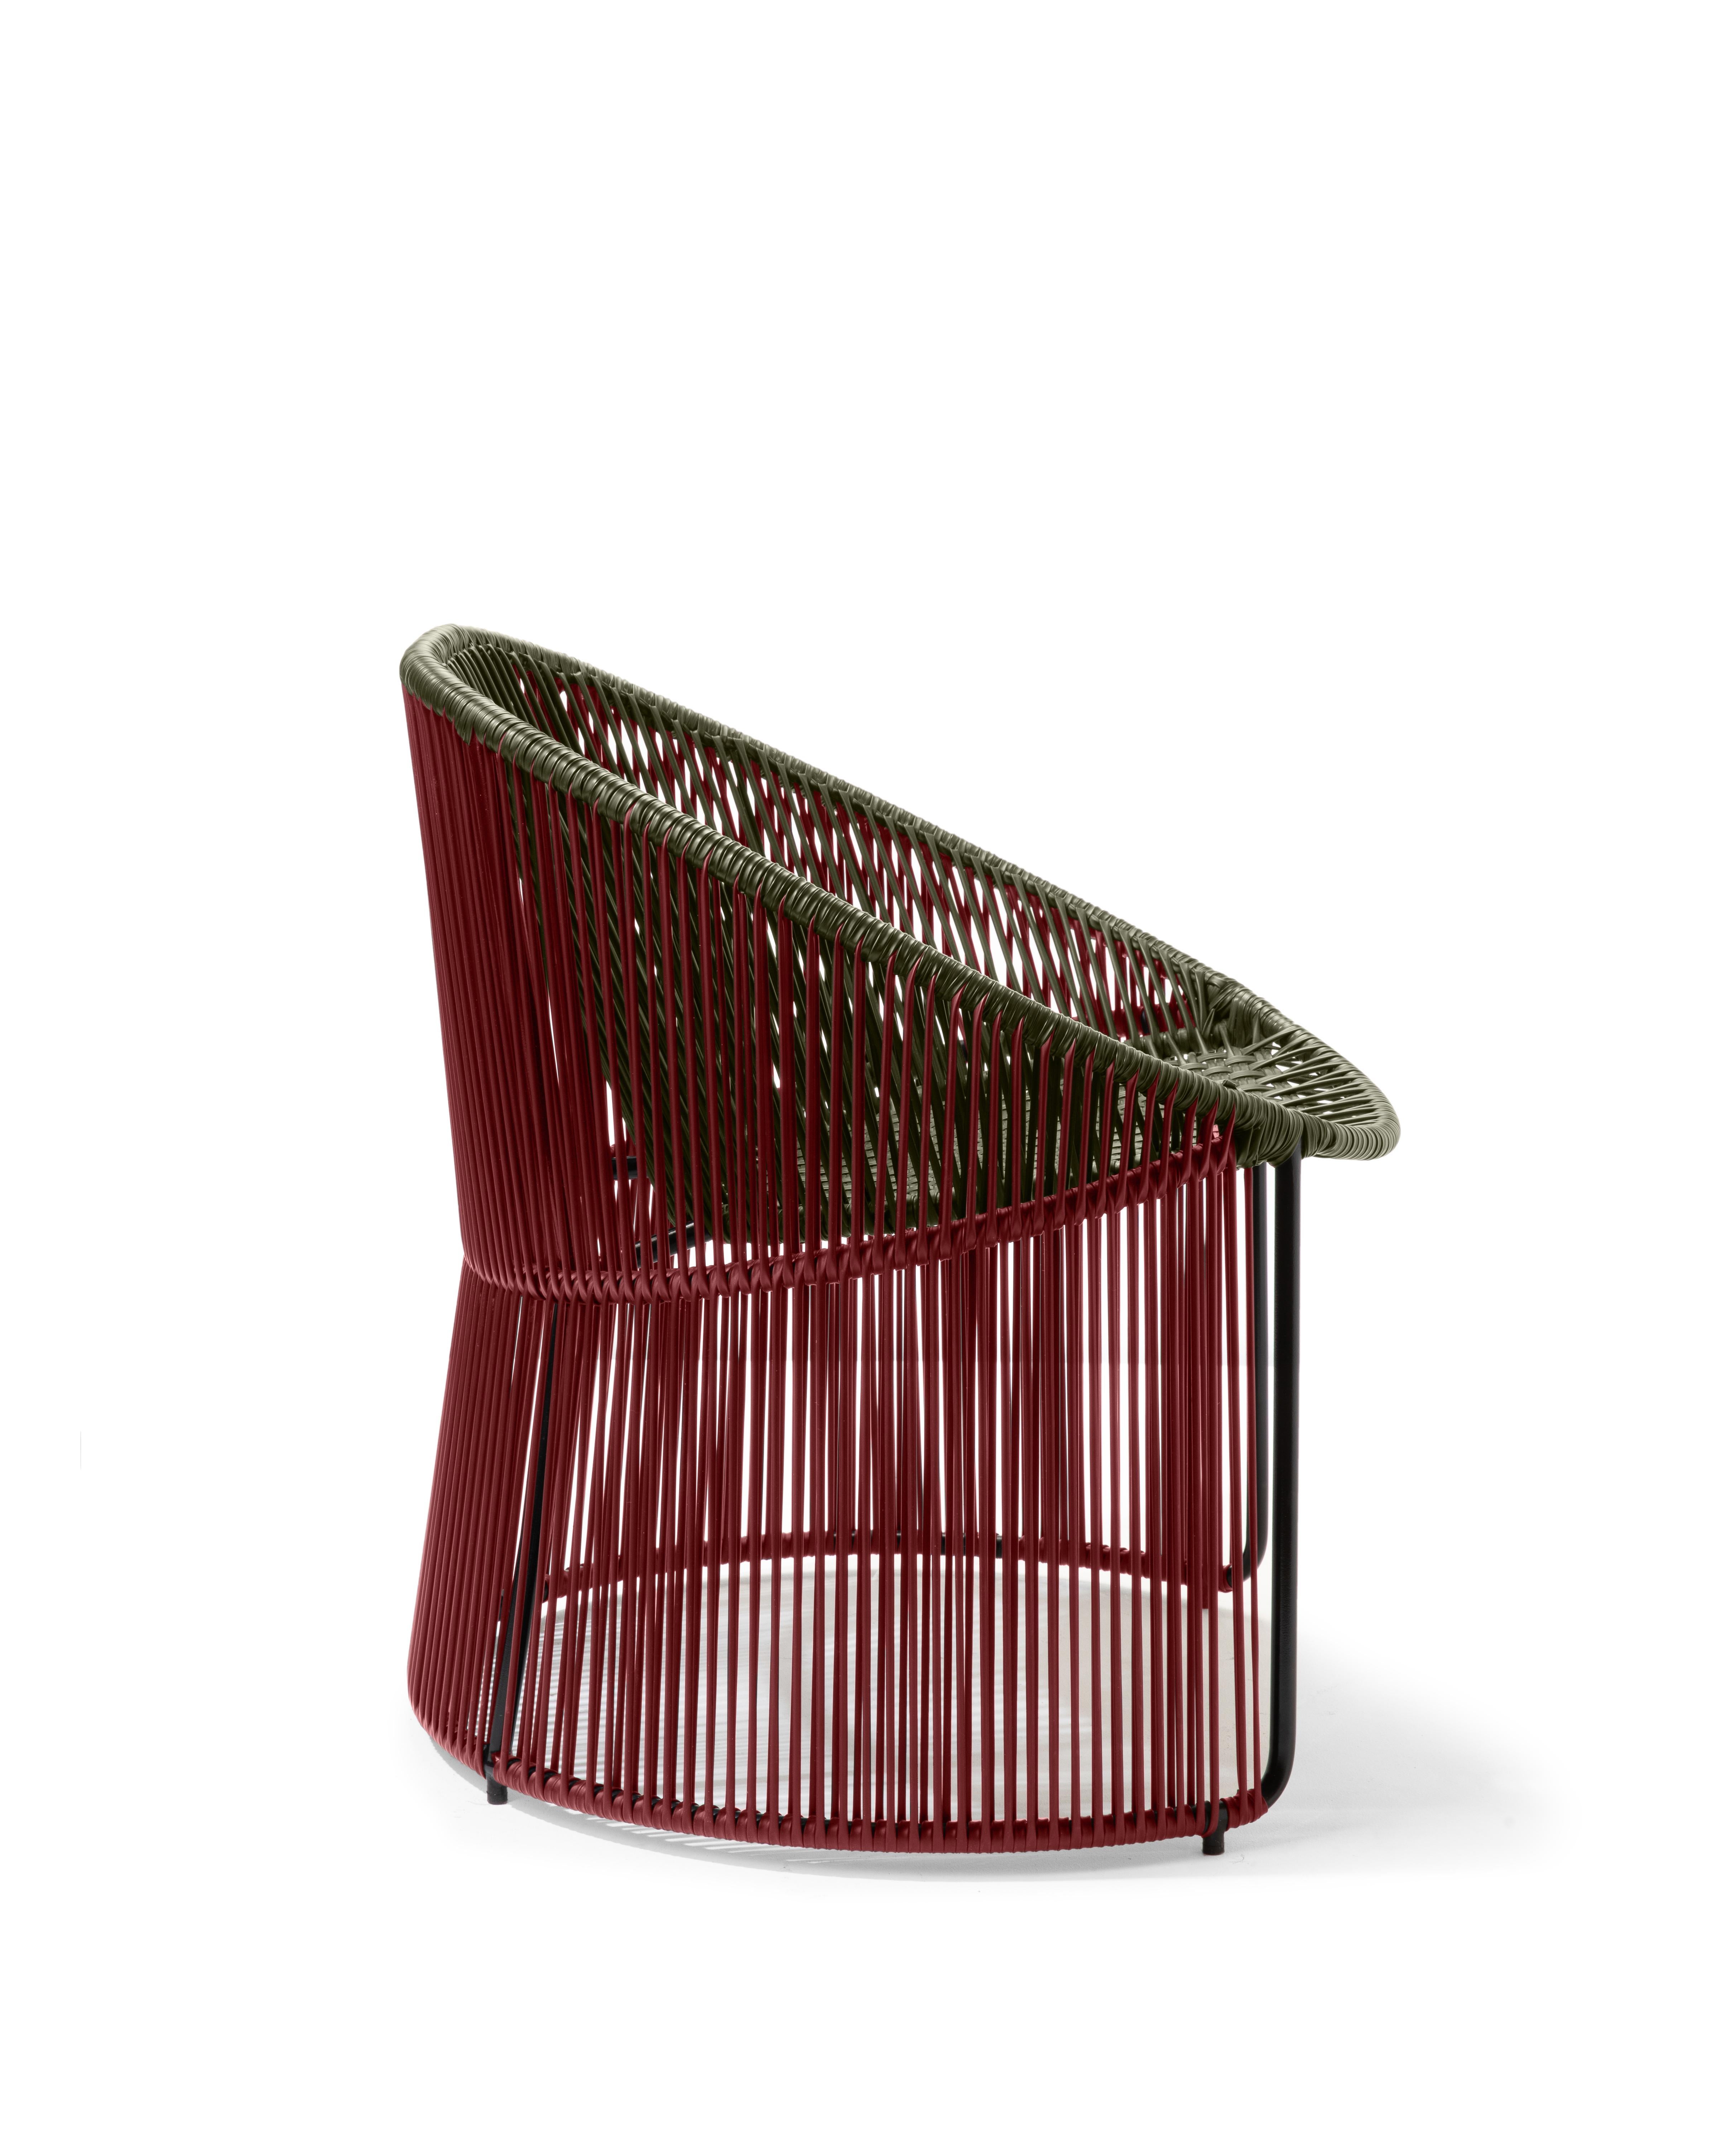 German Set of 4 Olive Cartagenas Lounge Chair by Sebastian Herkner For Sale